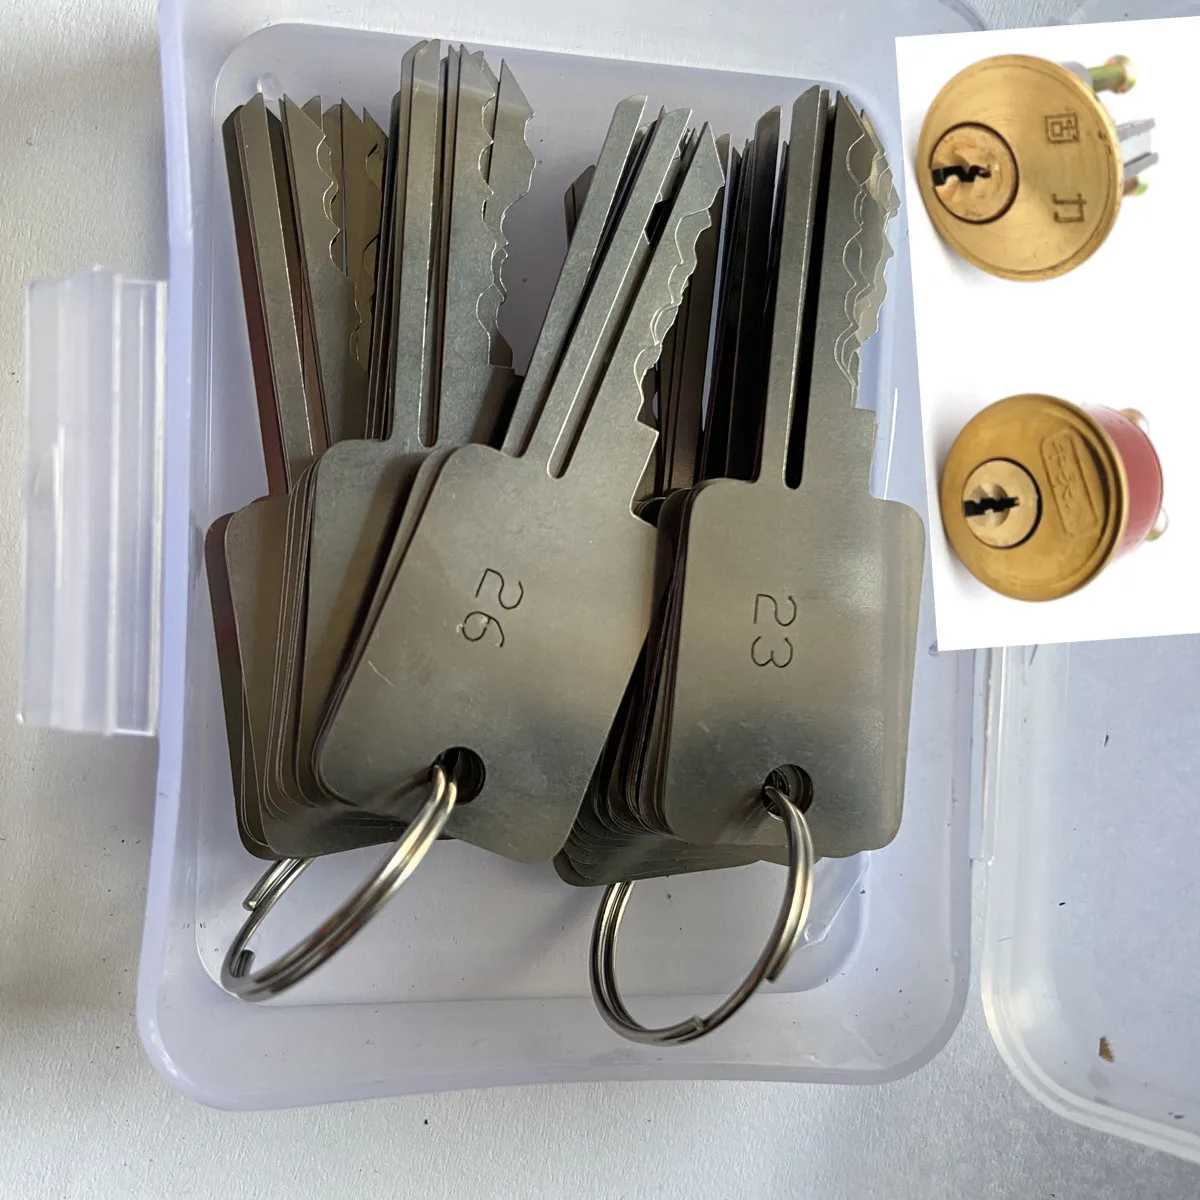 GOSO HUK NEW 48 in1  master keys for locks  SOWOYOO POWER KEY MASTER KEY pdr tools